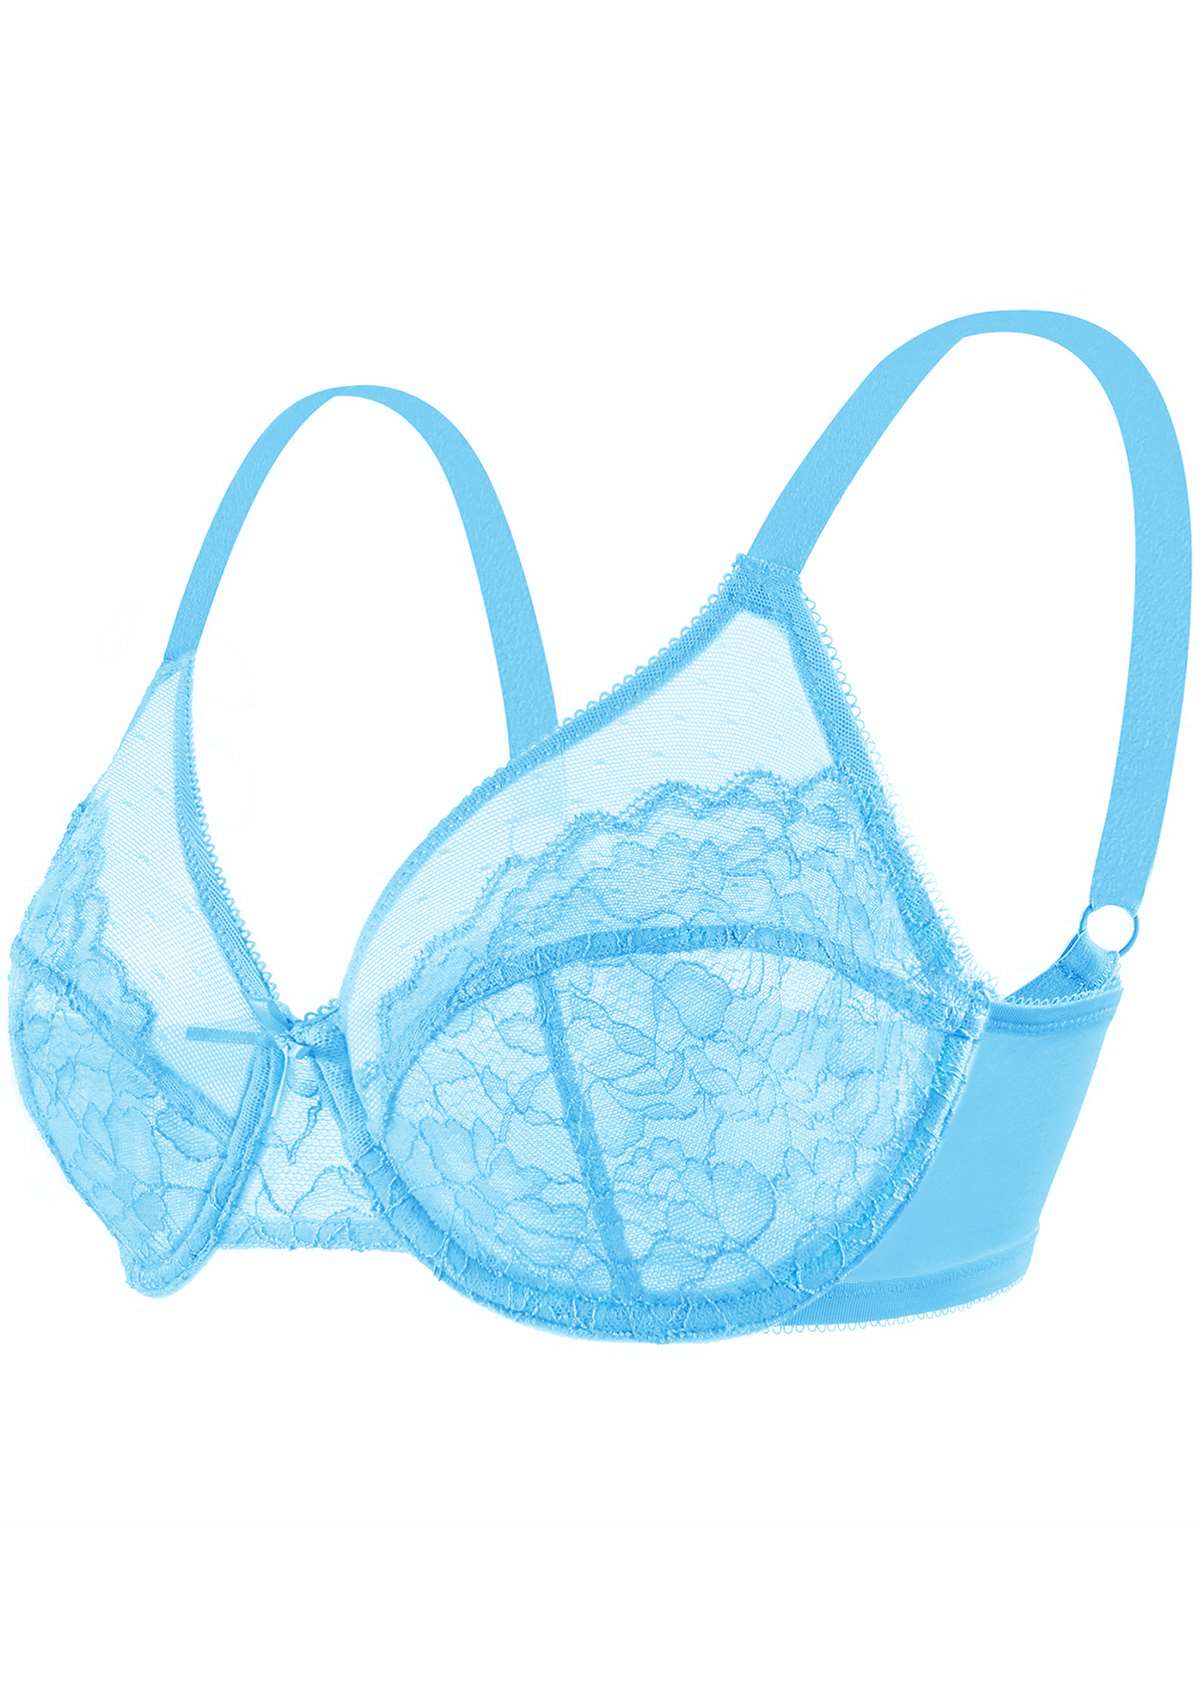 HSIA Enchante Minimizer Lace Bra: Full Support For Heavy Breasts - Capri Blue / 42 / G